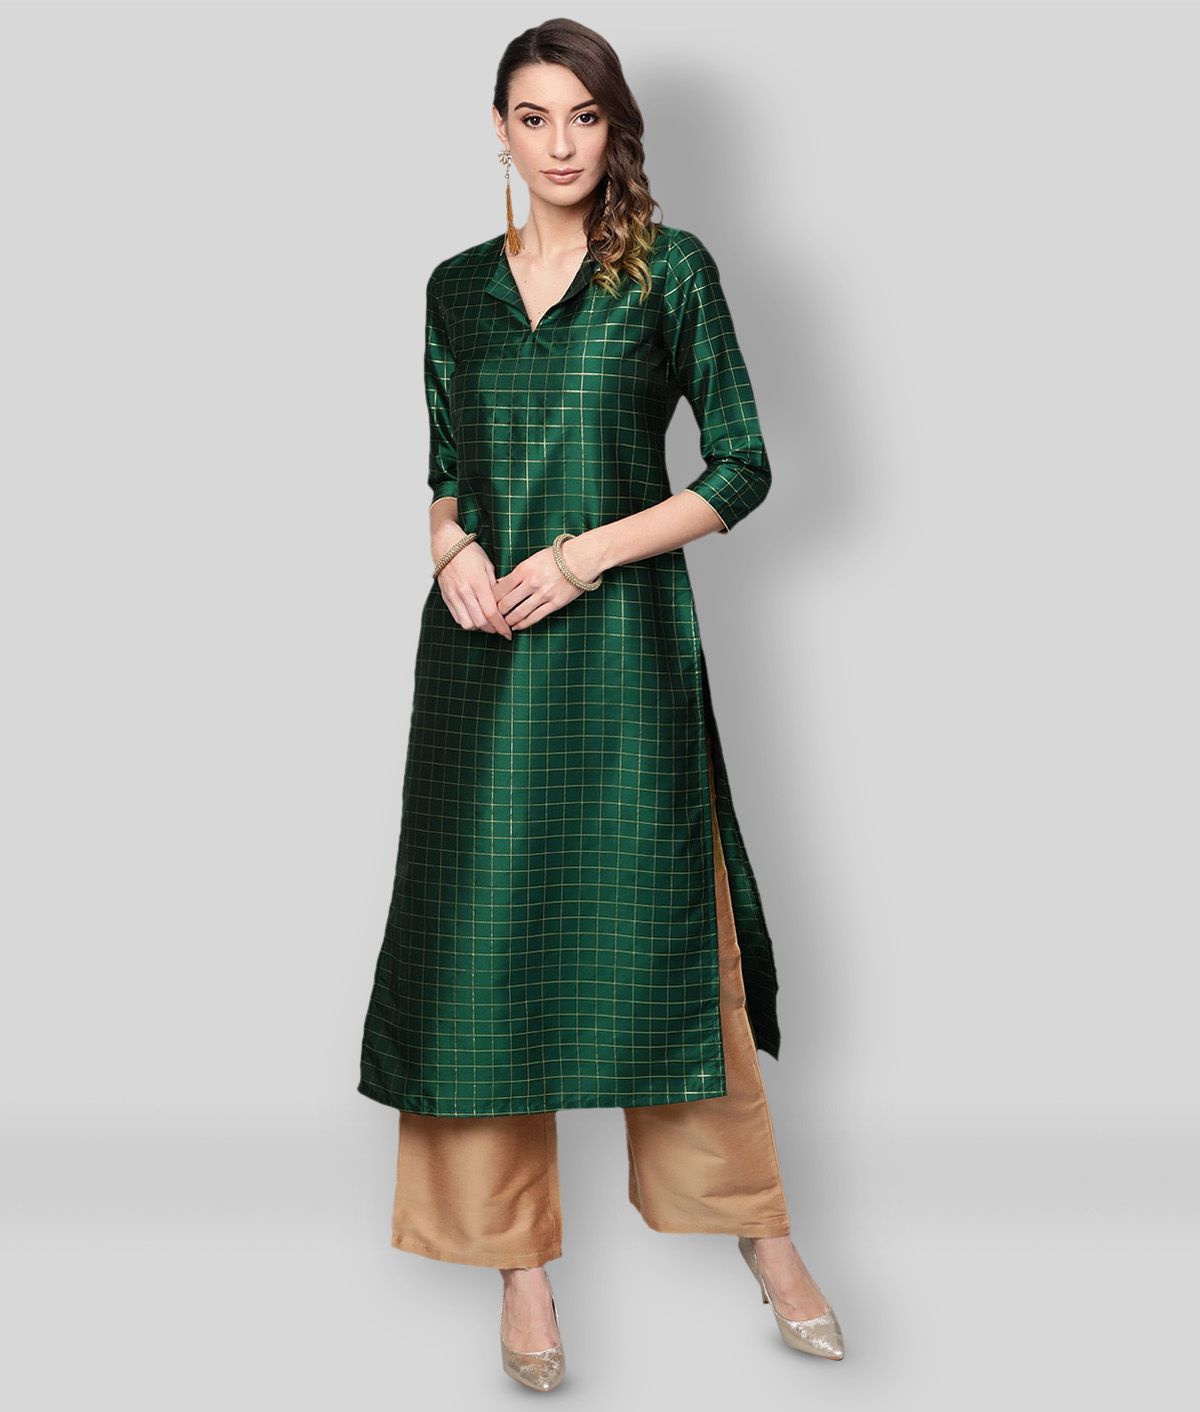 AKS - Green Polyester Women's Straight Kurti ( Pack of 1 )